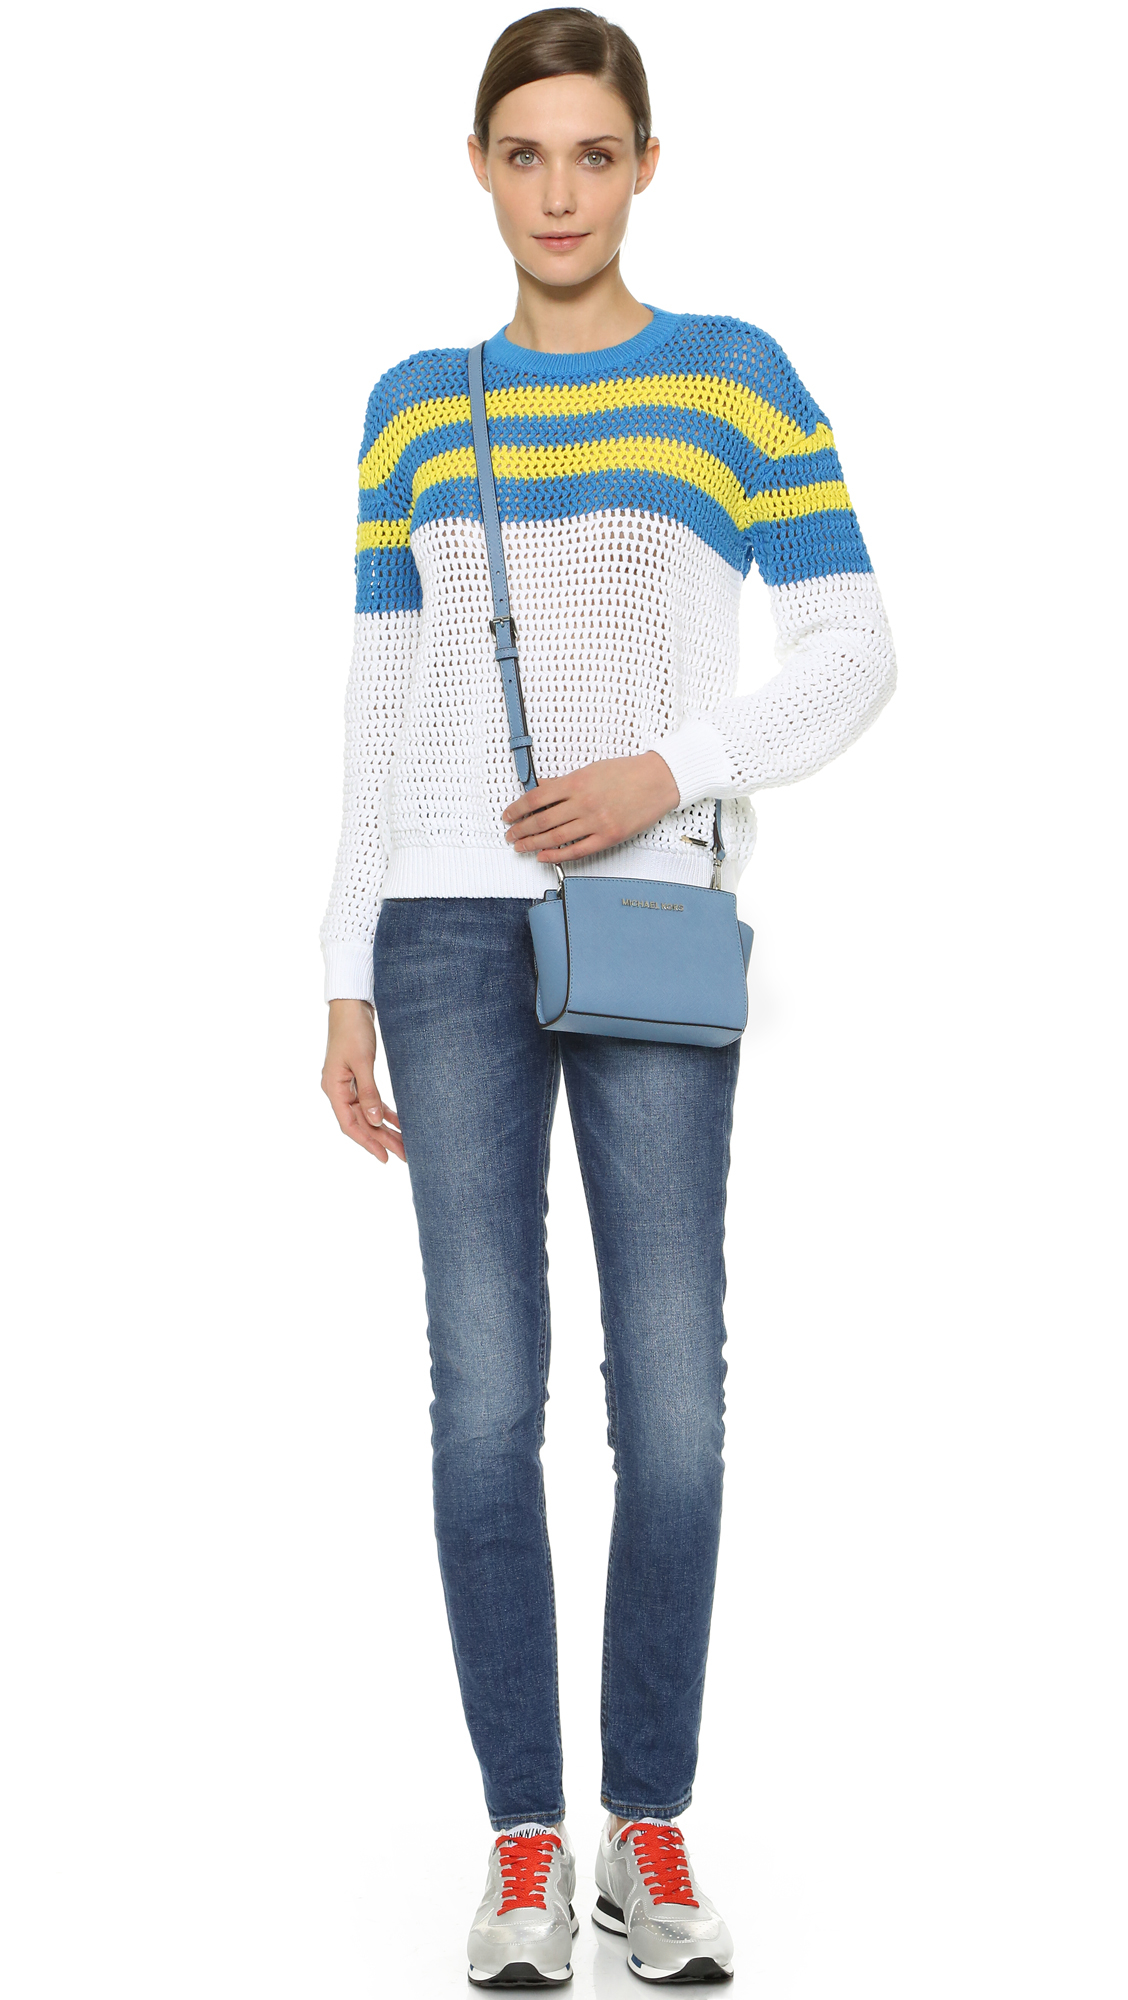 Michael Kors Selma Mini Messenger Bag - ShopperBoard